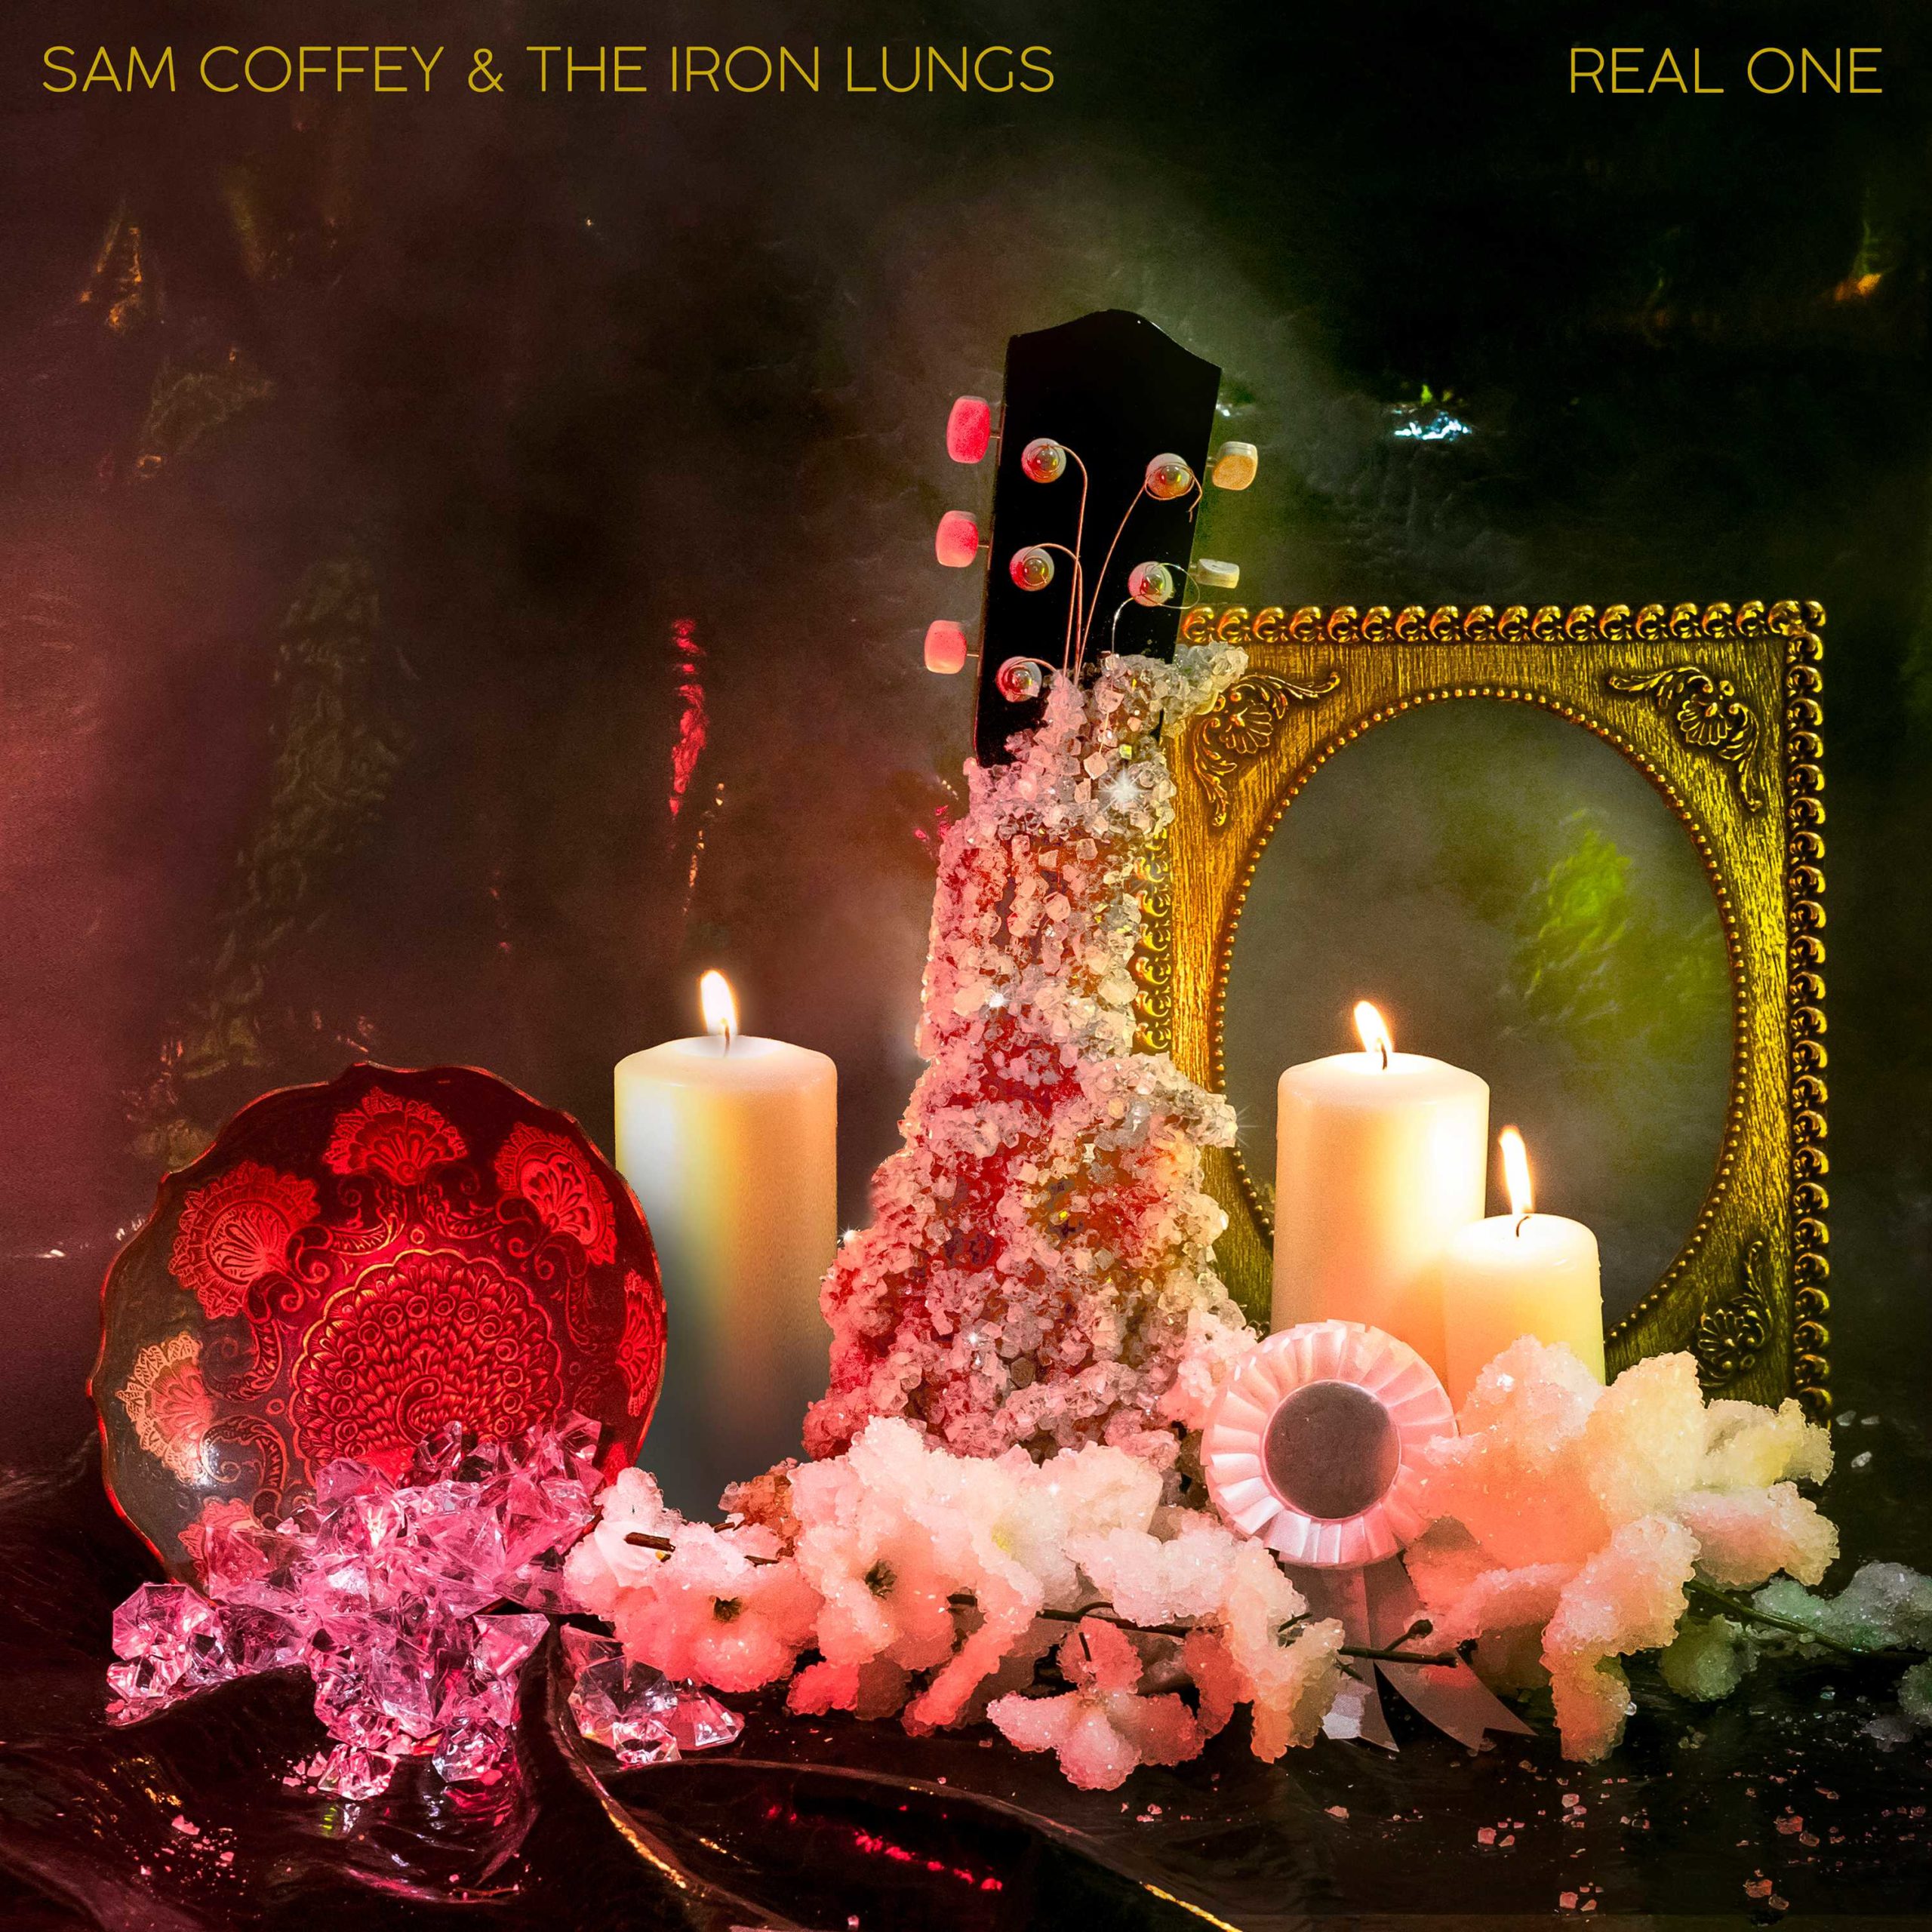 ROCK AMERICANO - Página 5 Sam_coffey_-_real_one-scaled